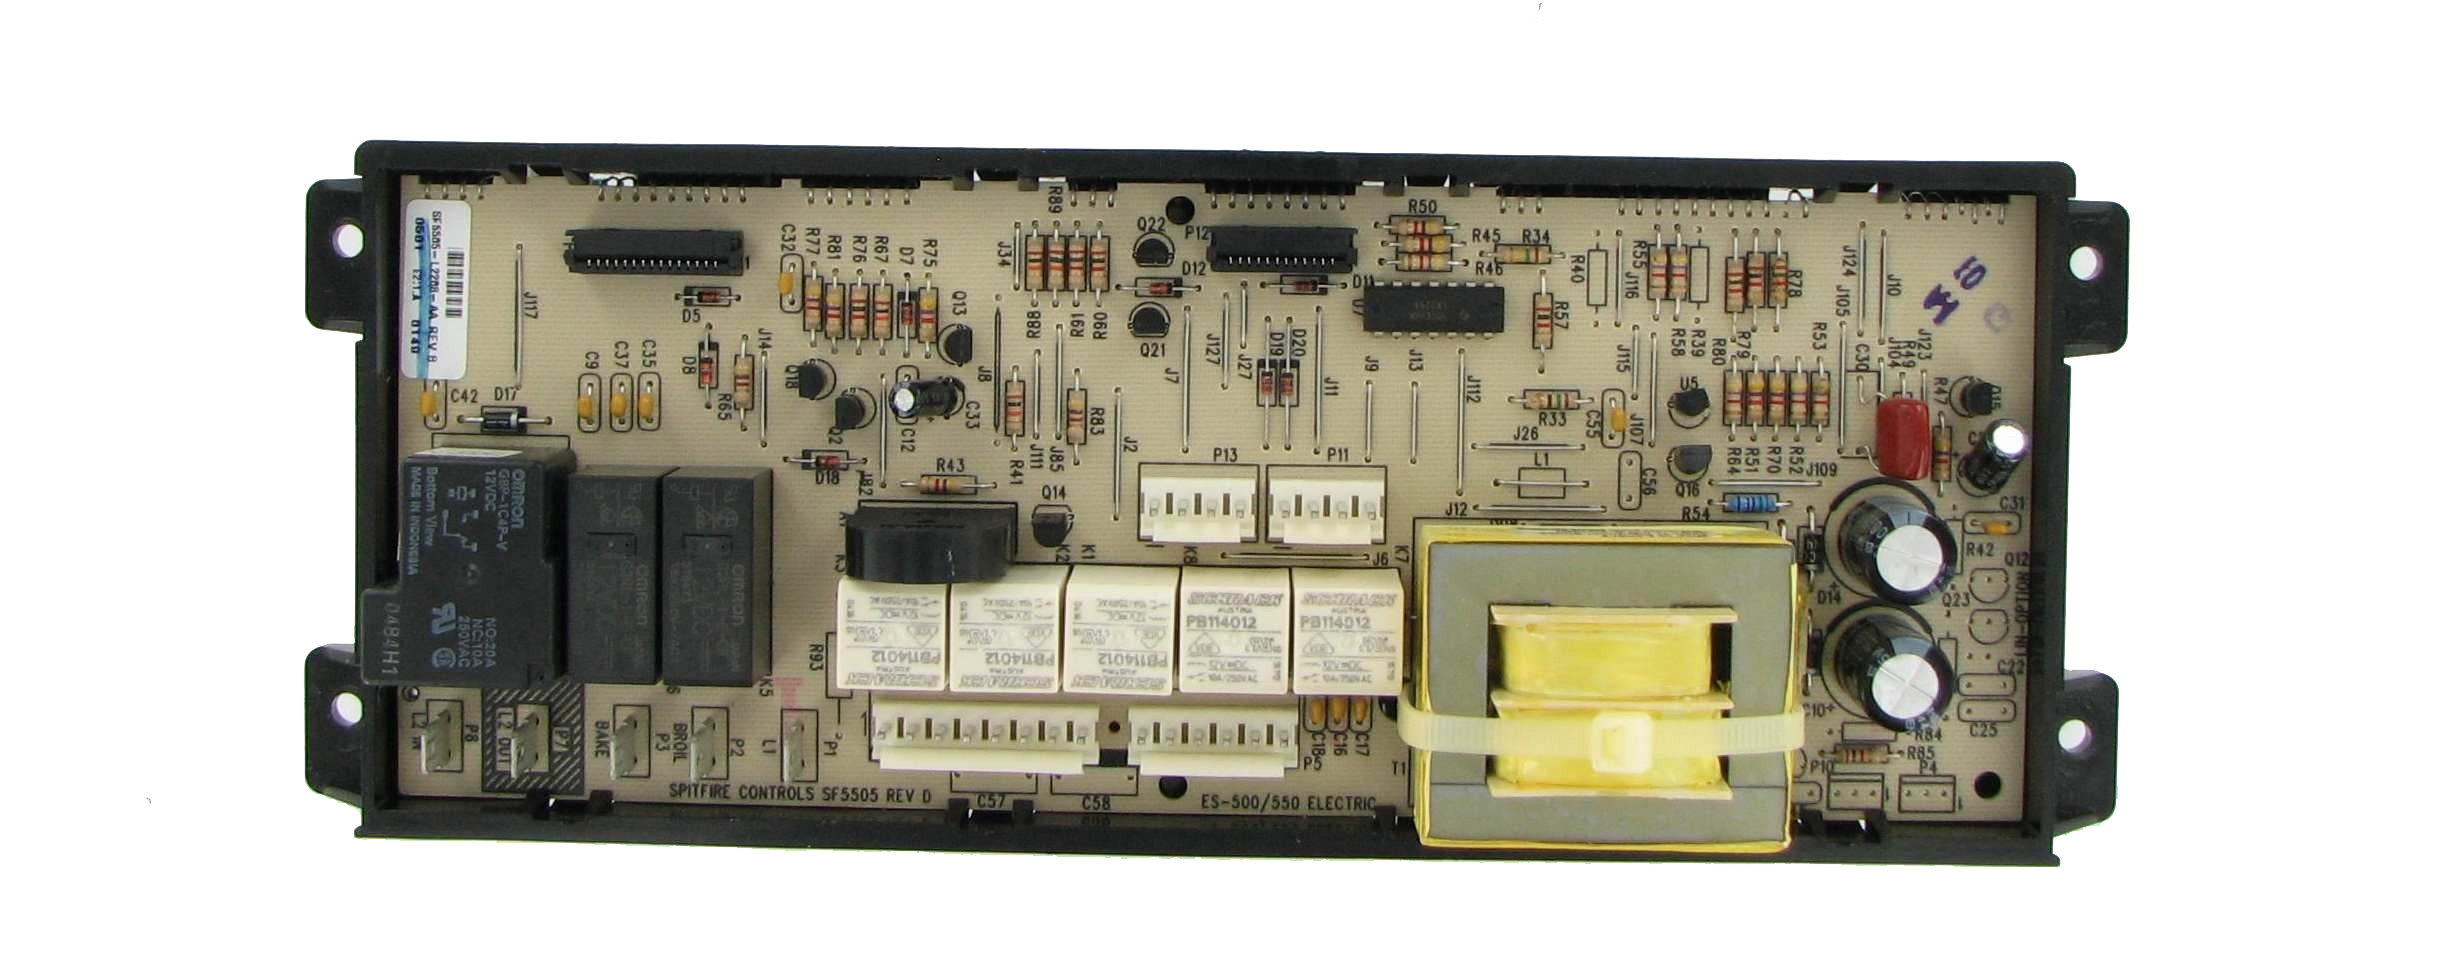 Electrolux/Frigidaire/Kenmore 318010102 Oven Control Board Repair Service